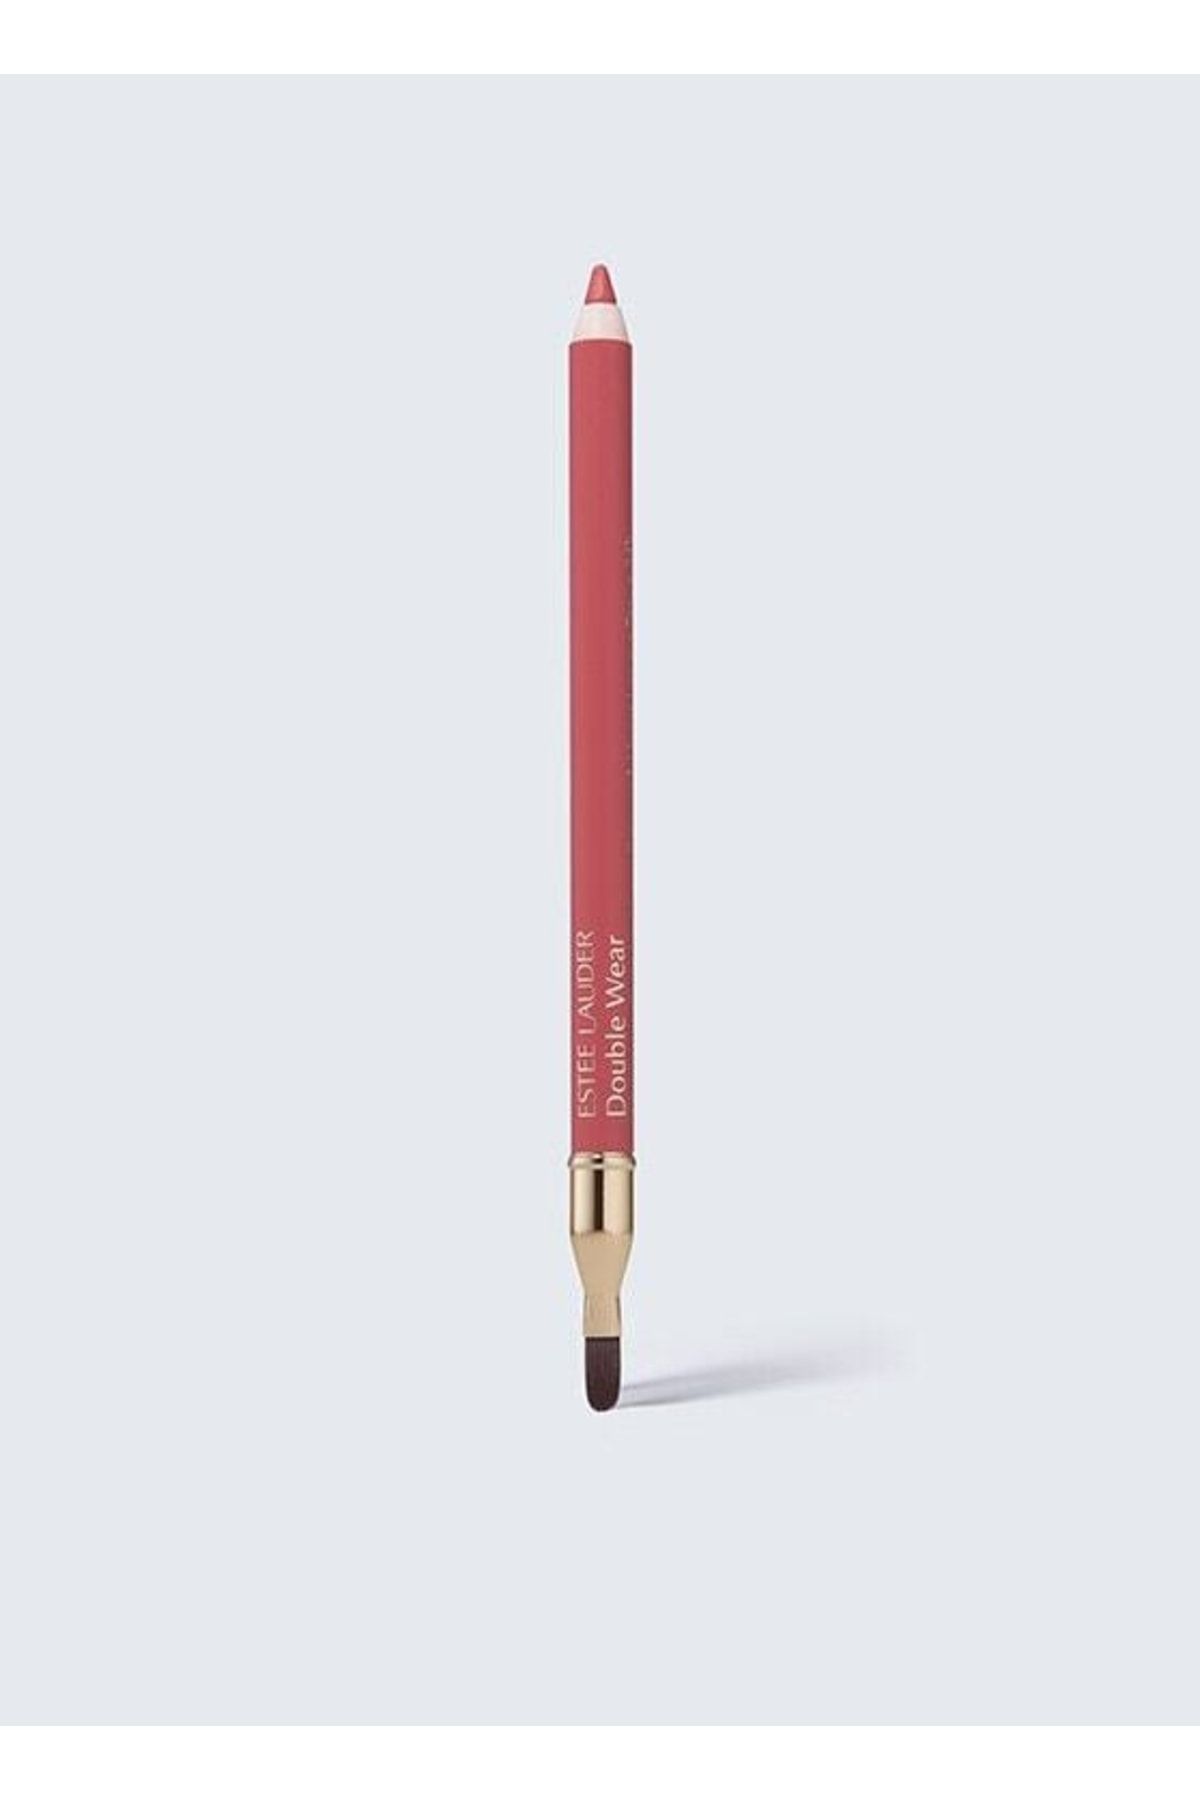 Estee Lauder لب مداد دوگانه 24 ساعته با ثبات بالا 24 ساعته 1.2 گرم (روغن جوجوبا) رنگ 015 گونه